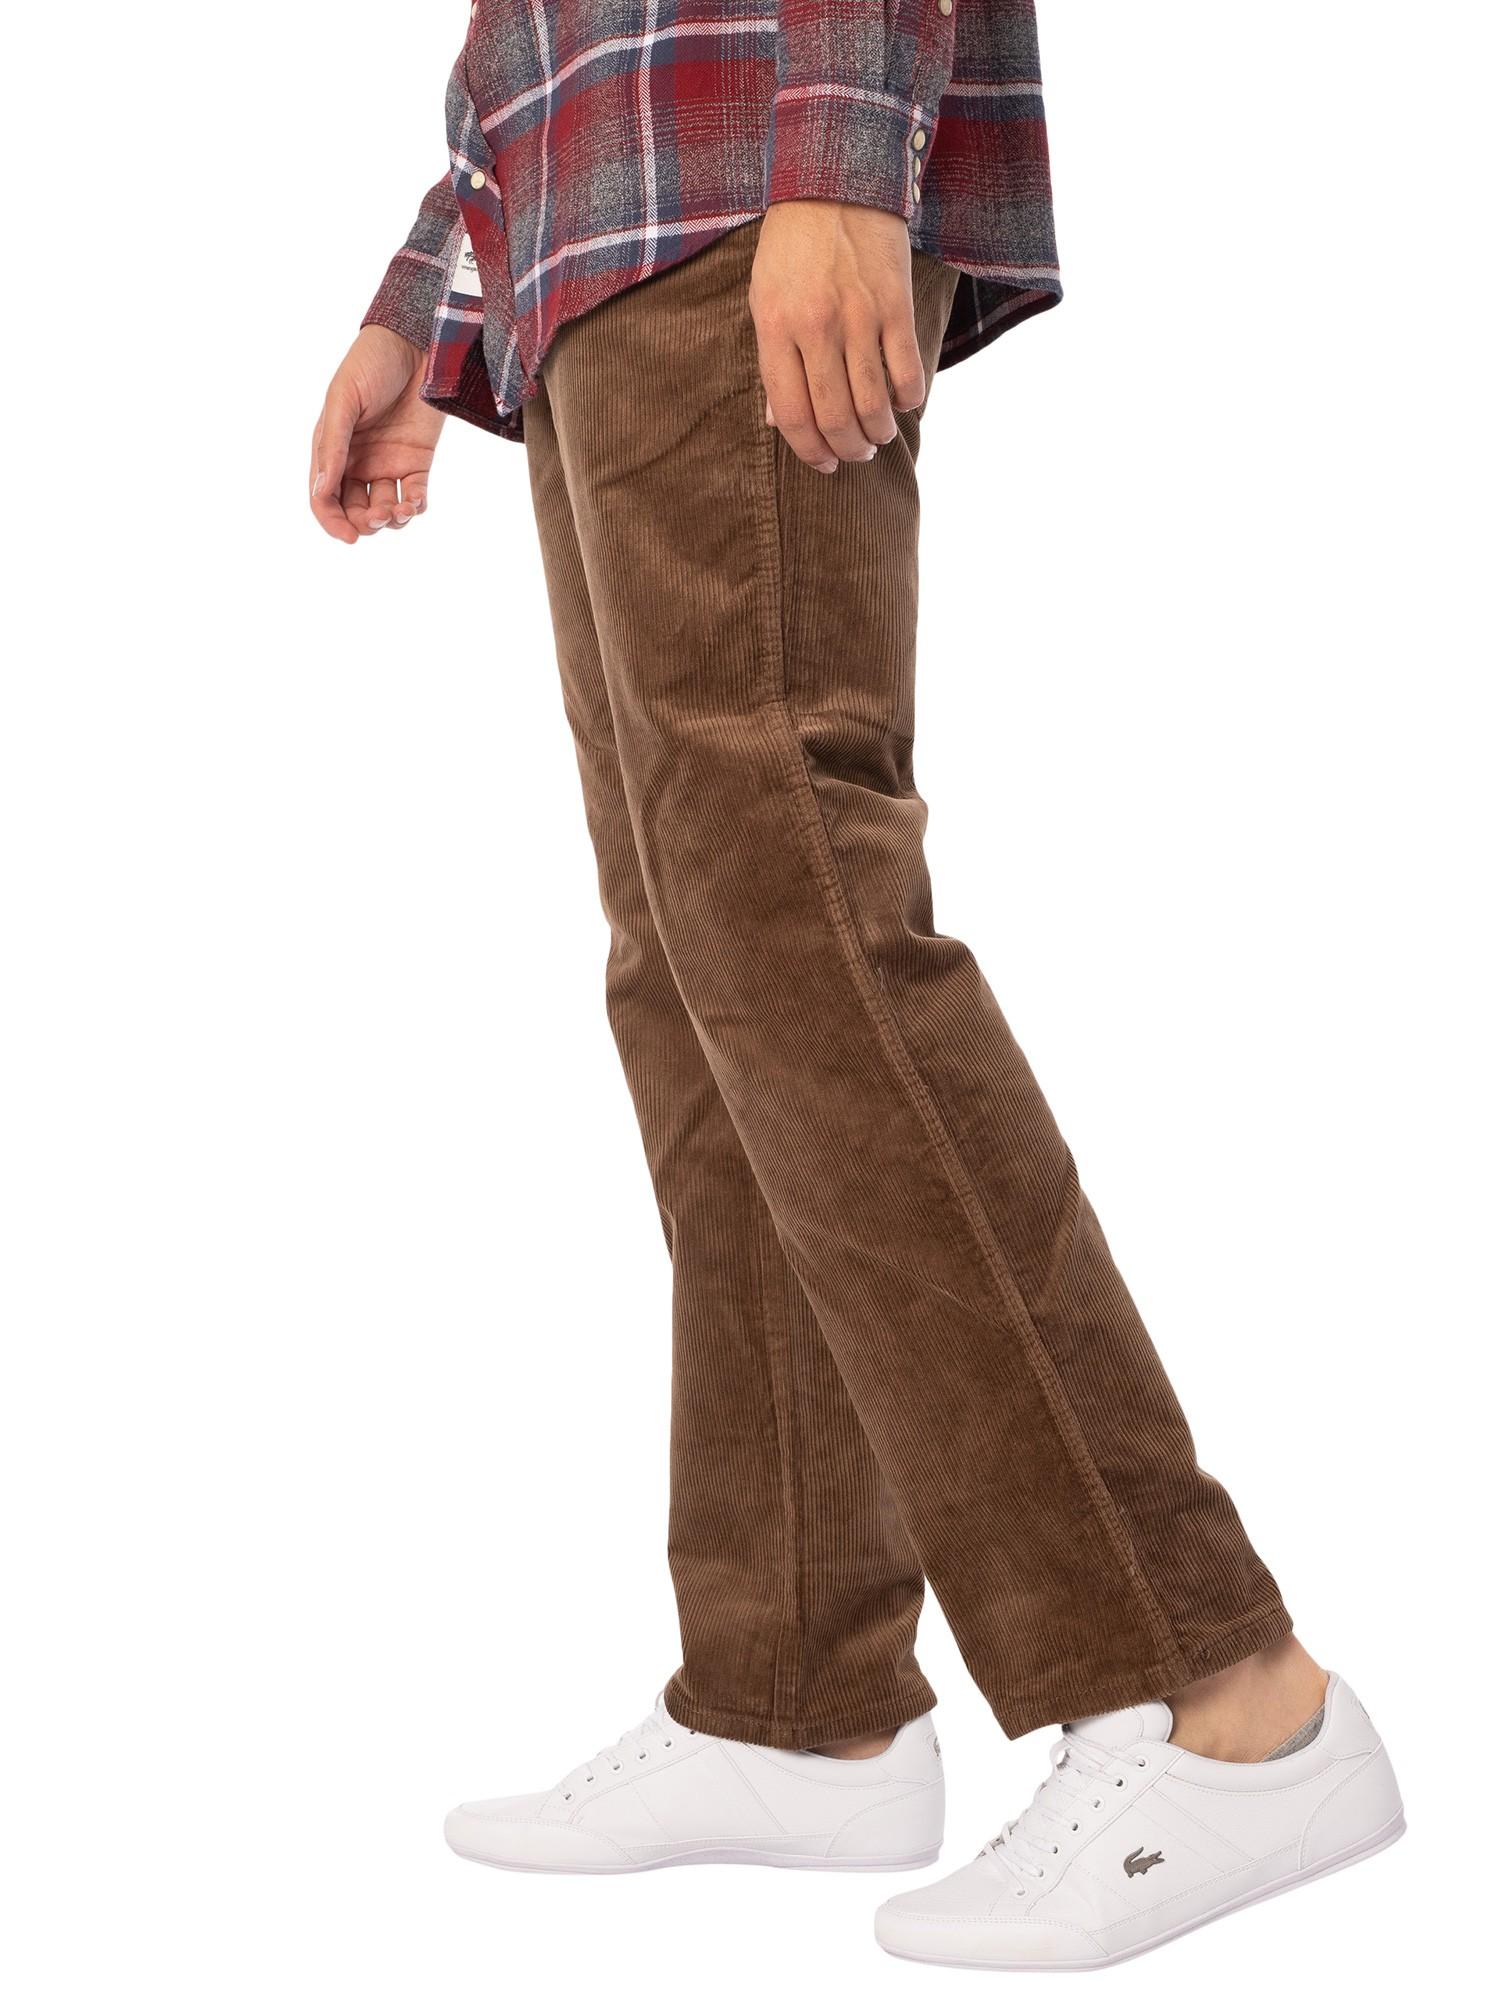 Wrangler Texas Straight Corduroy Jeans in Brown for Men